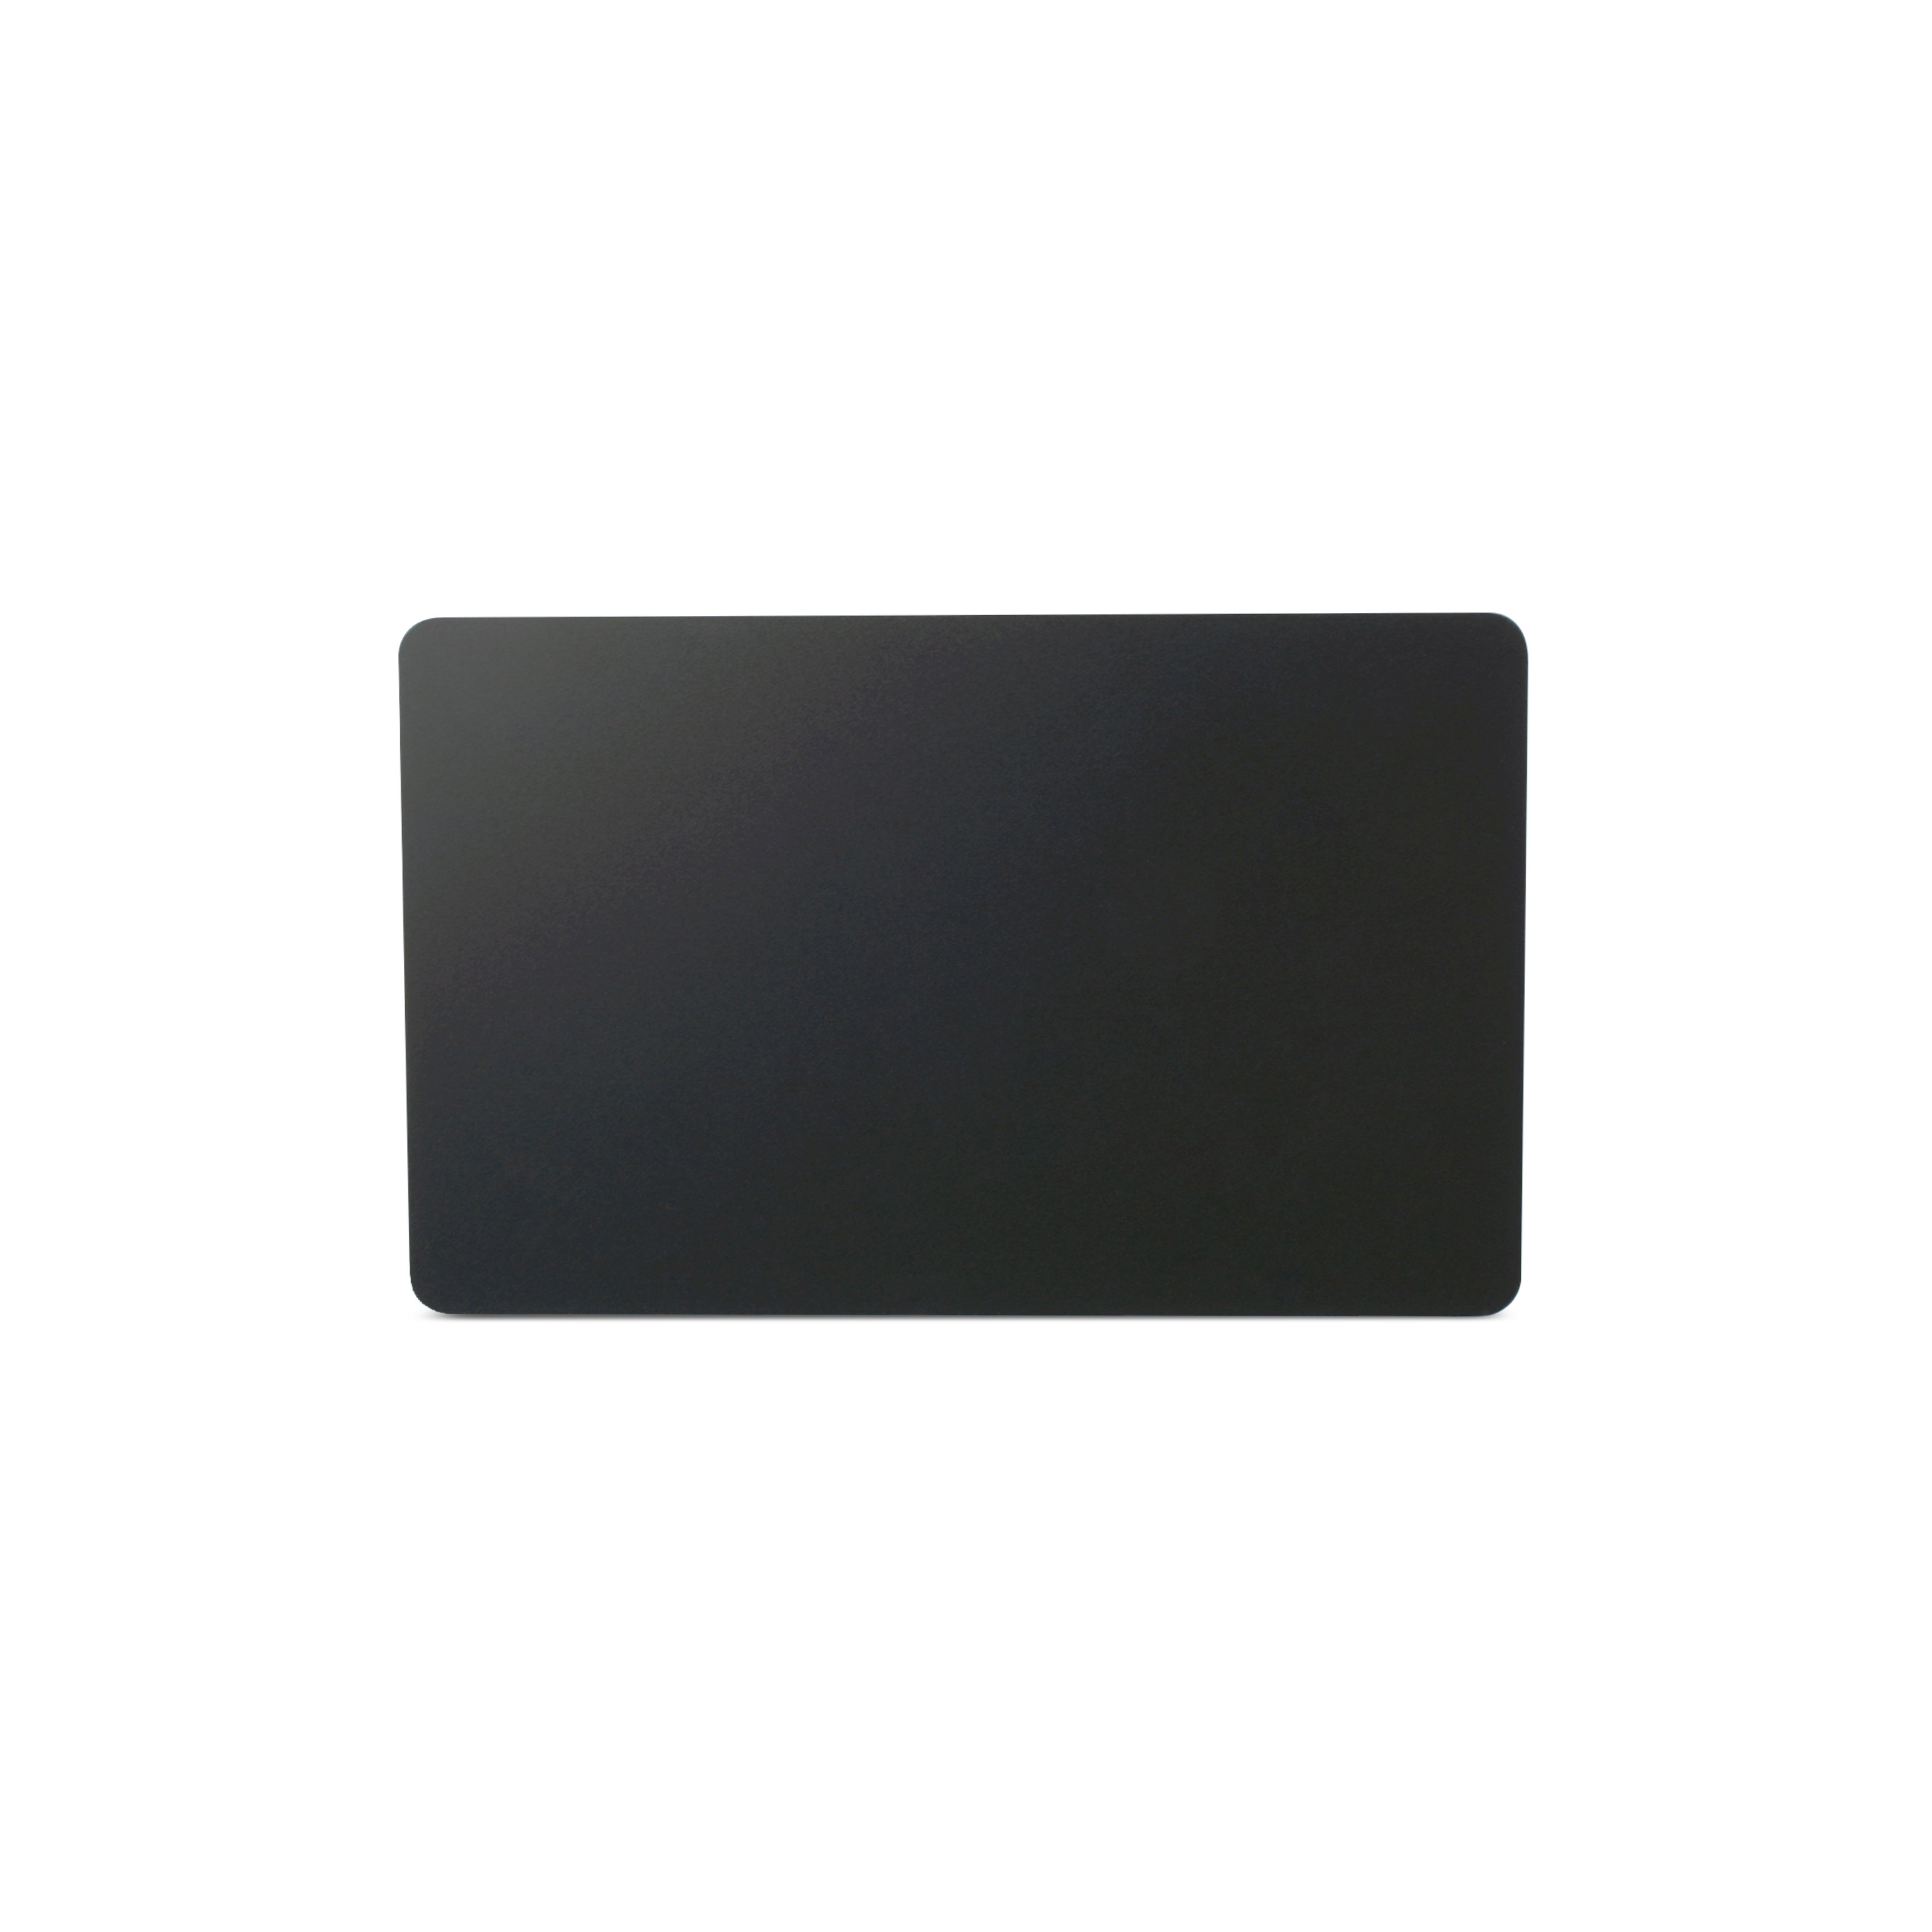 Schwarze NFC Karte aus PVC